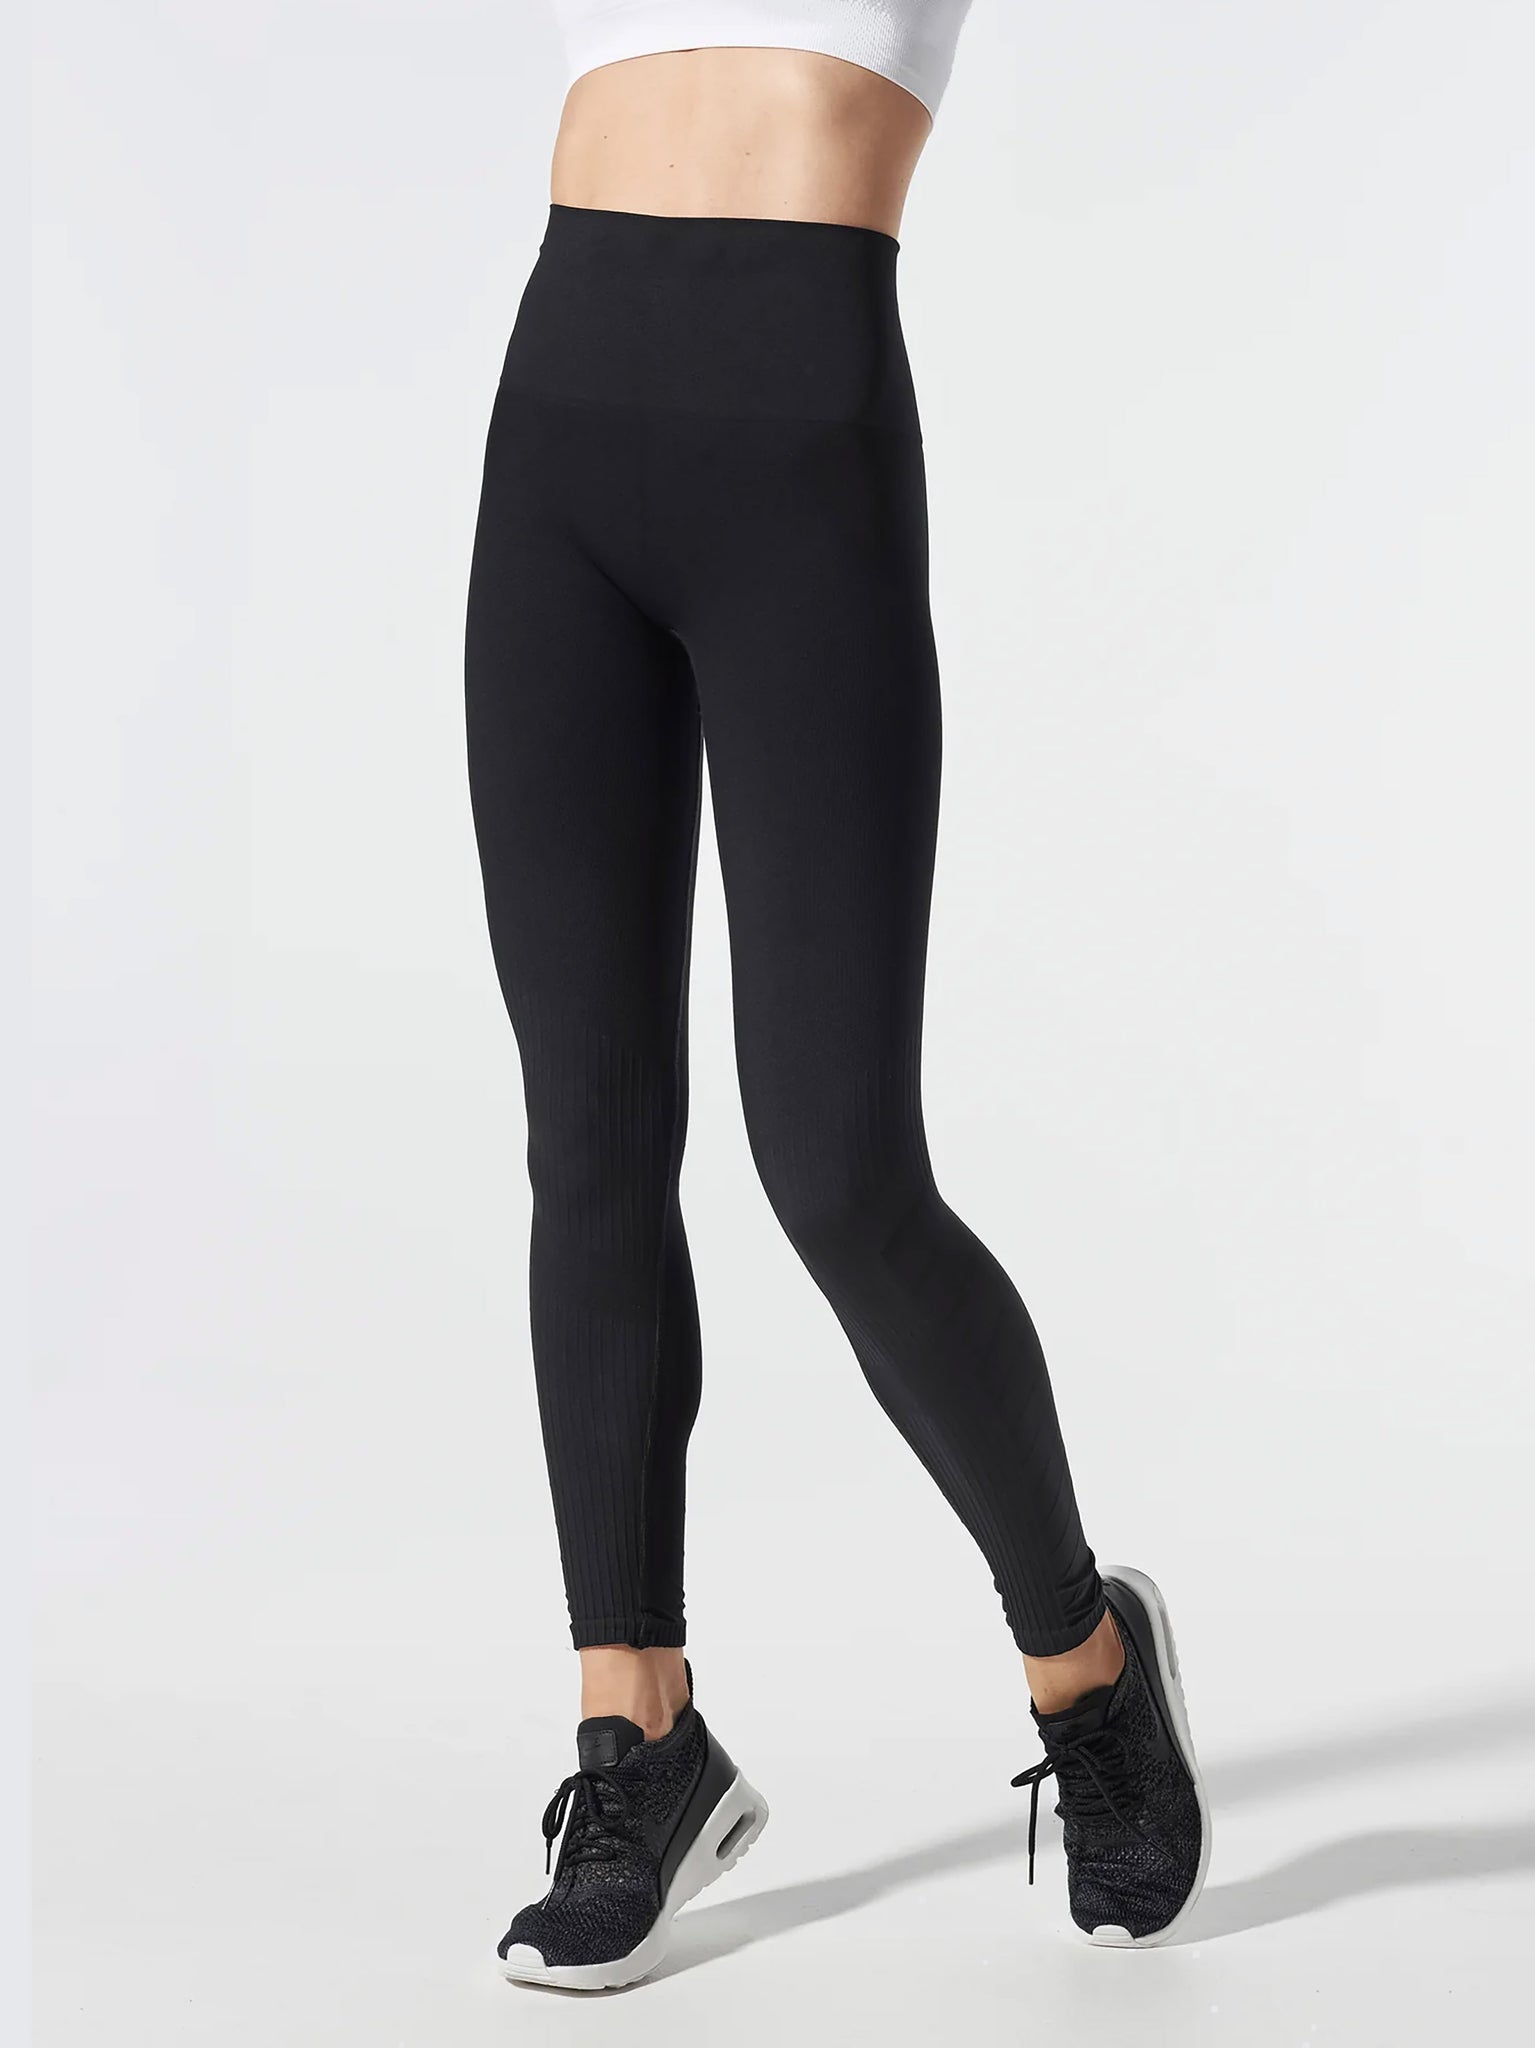 Women's Nike Go Purple Firm Support High Waist 7/8 Length XLarge Leggings |  eBay